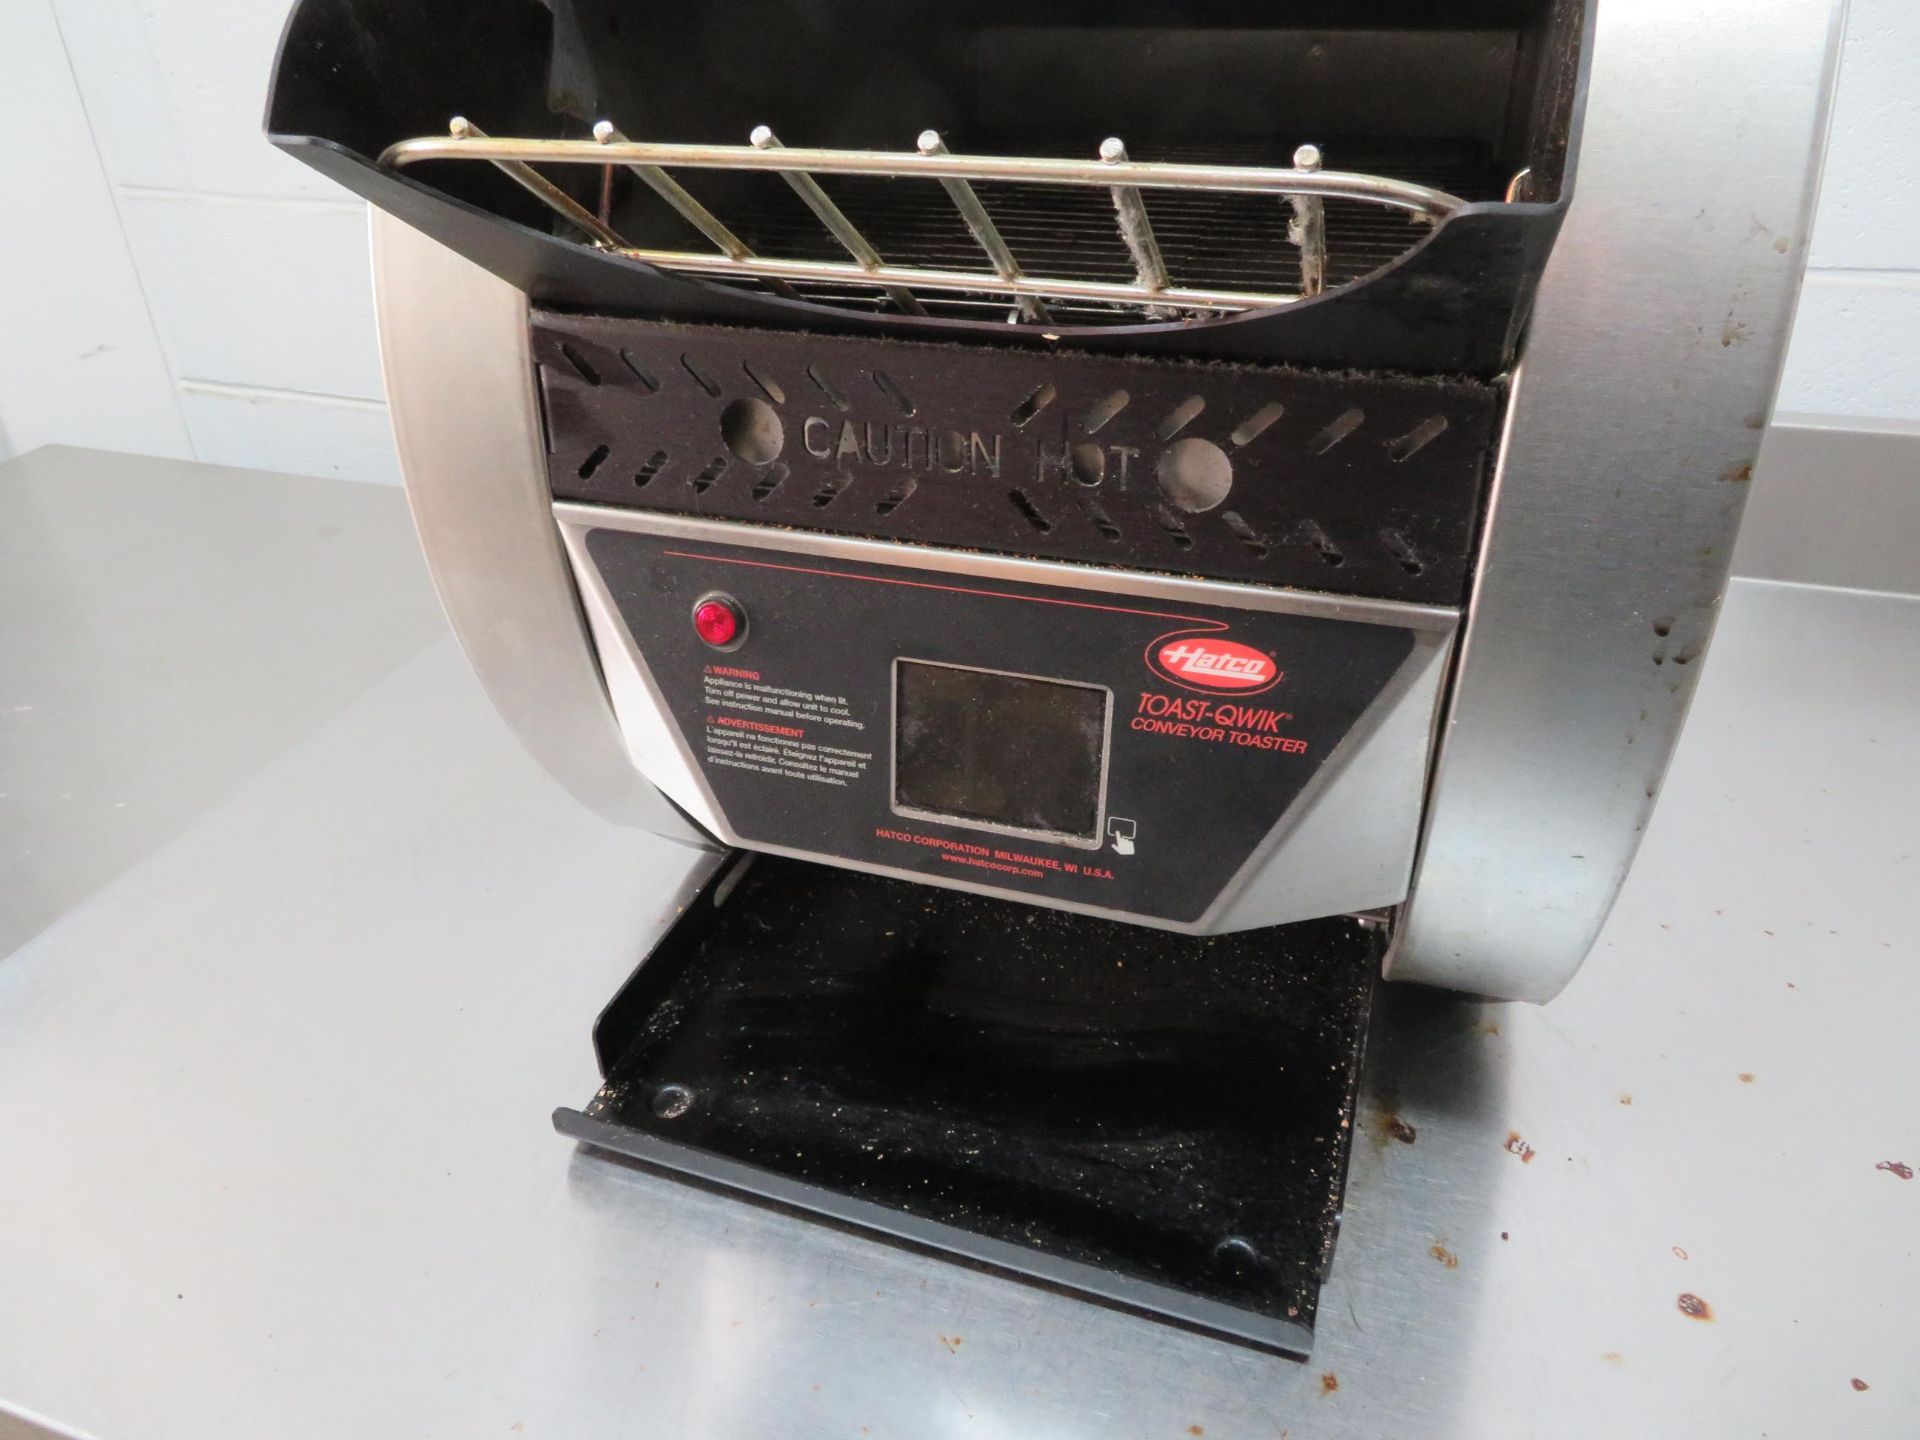 HATCO Toast Quik conveyor toaster - Image 2 of 2